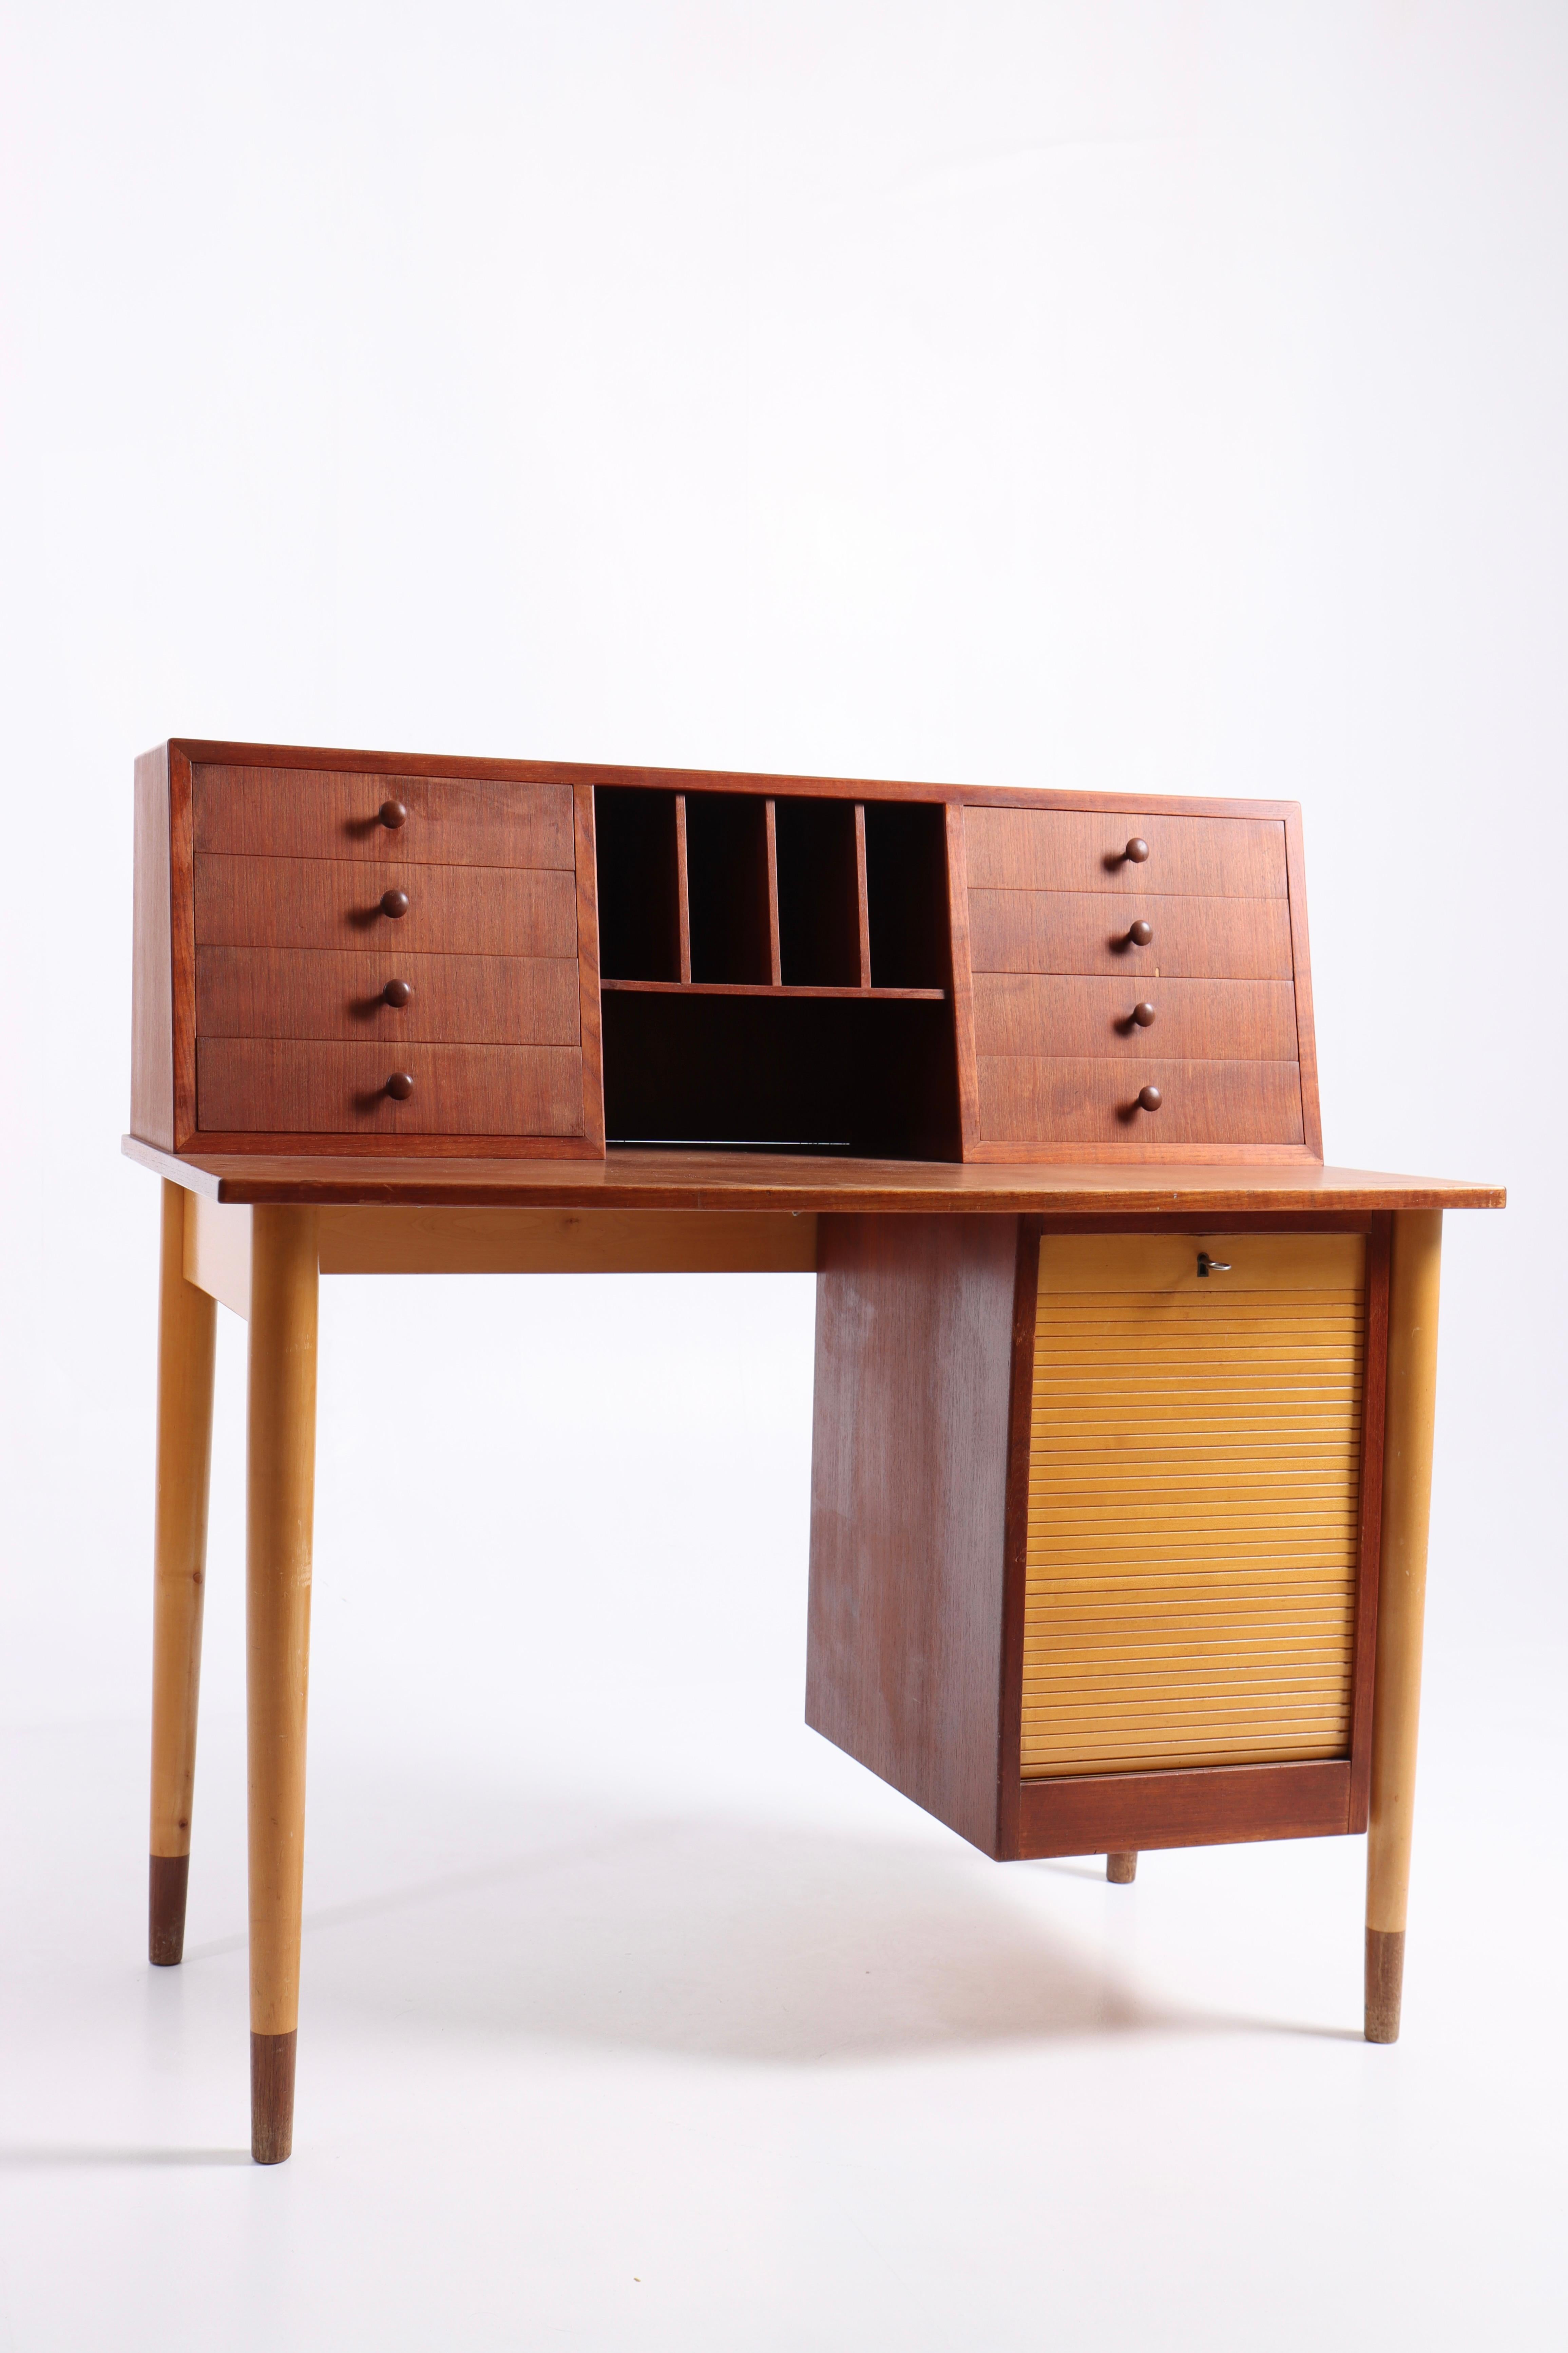 Scandinavian Modern Midcentury Desk in Teak & Beech with Organizer, 1950s For Sale